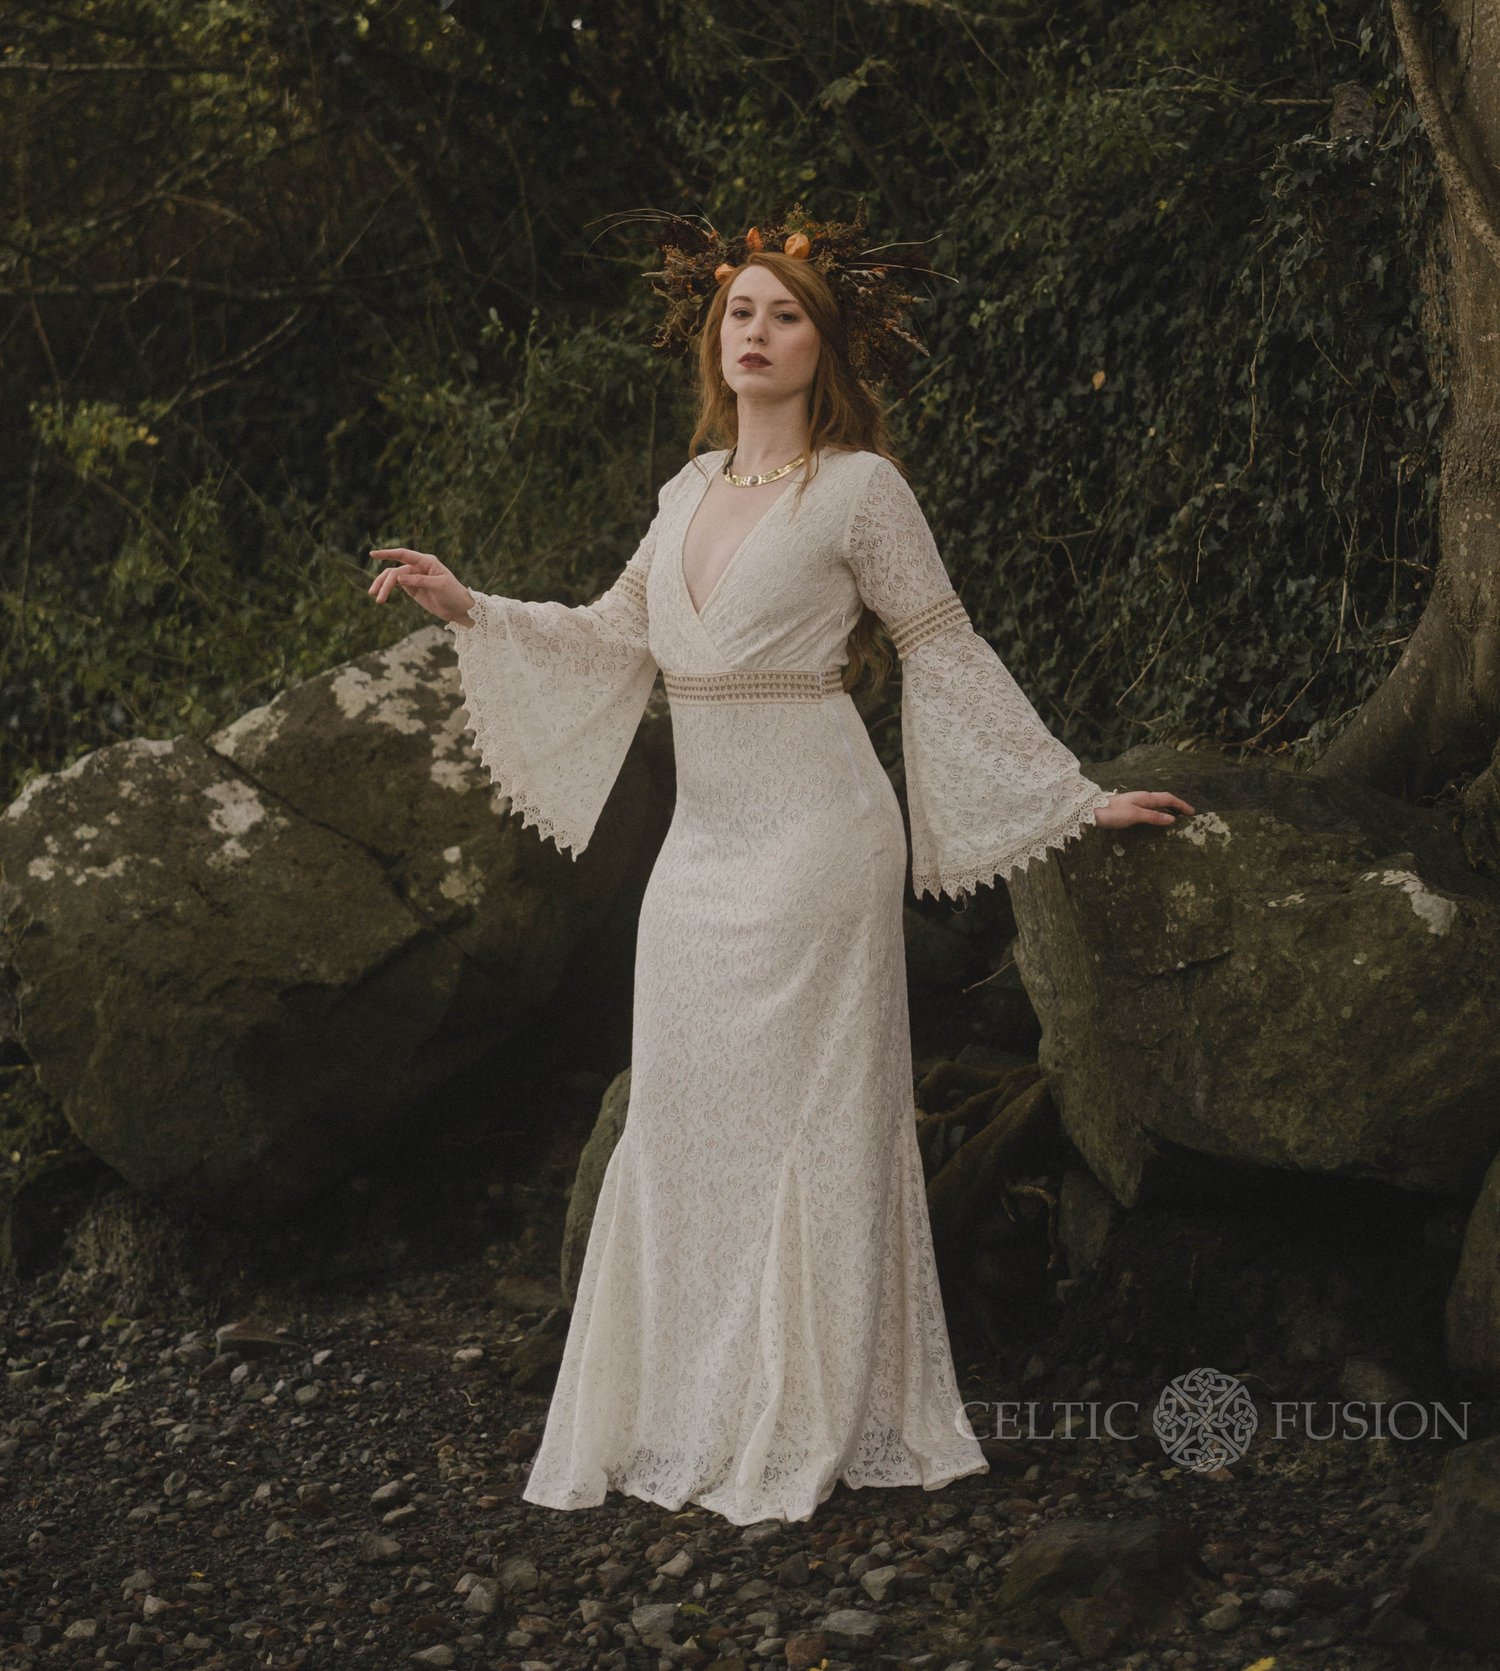 Irish Dresses - Celtic & Traditional From Ireland